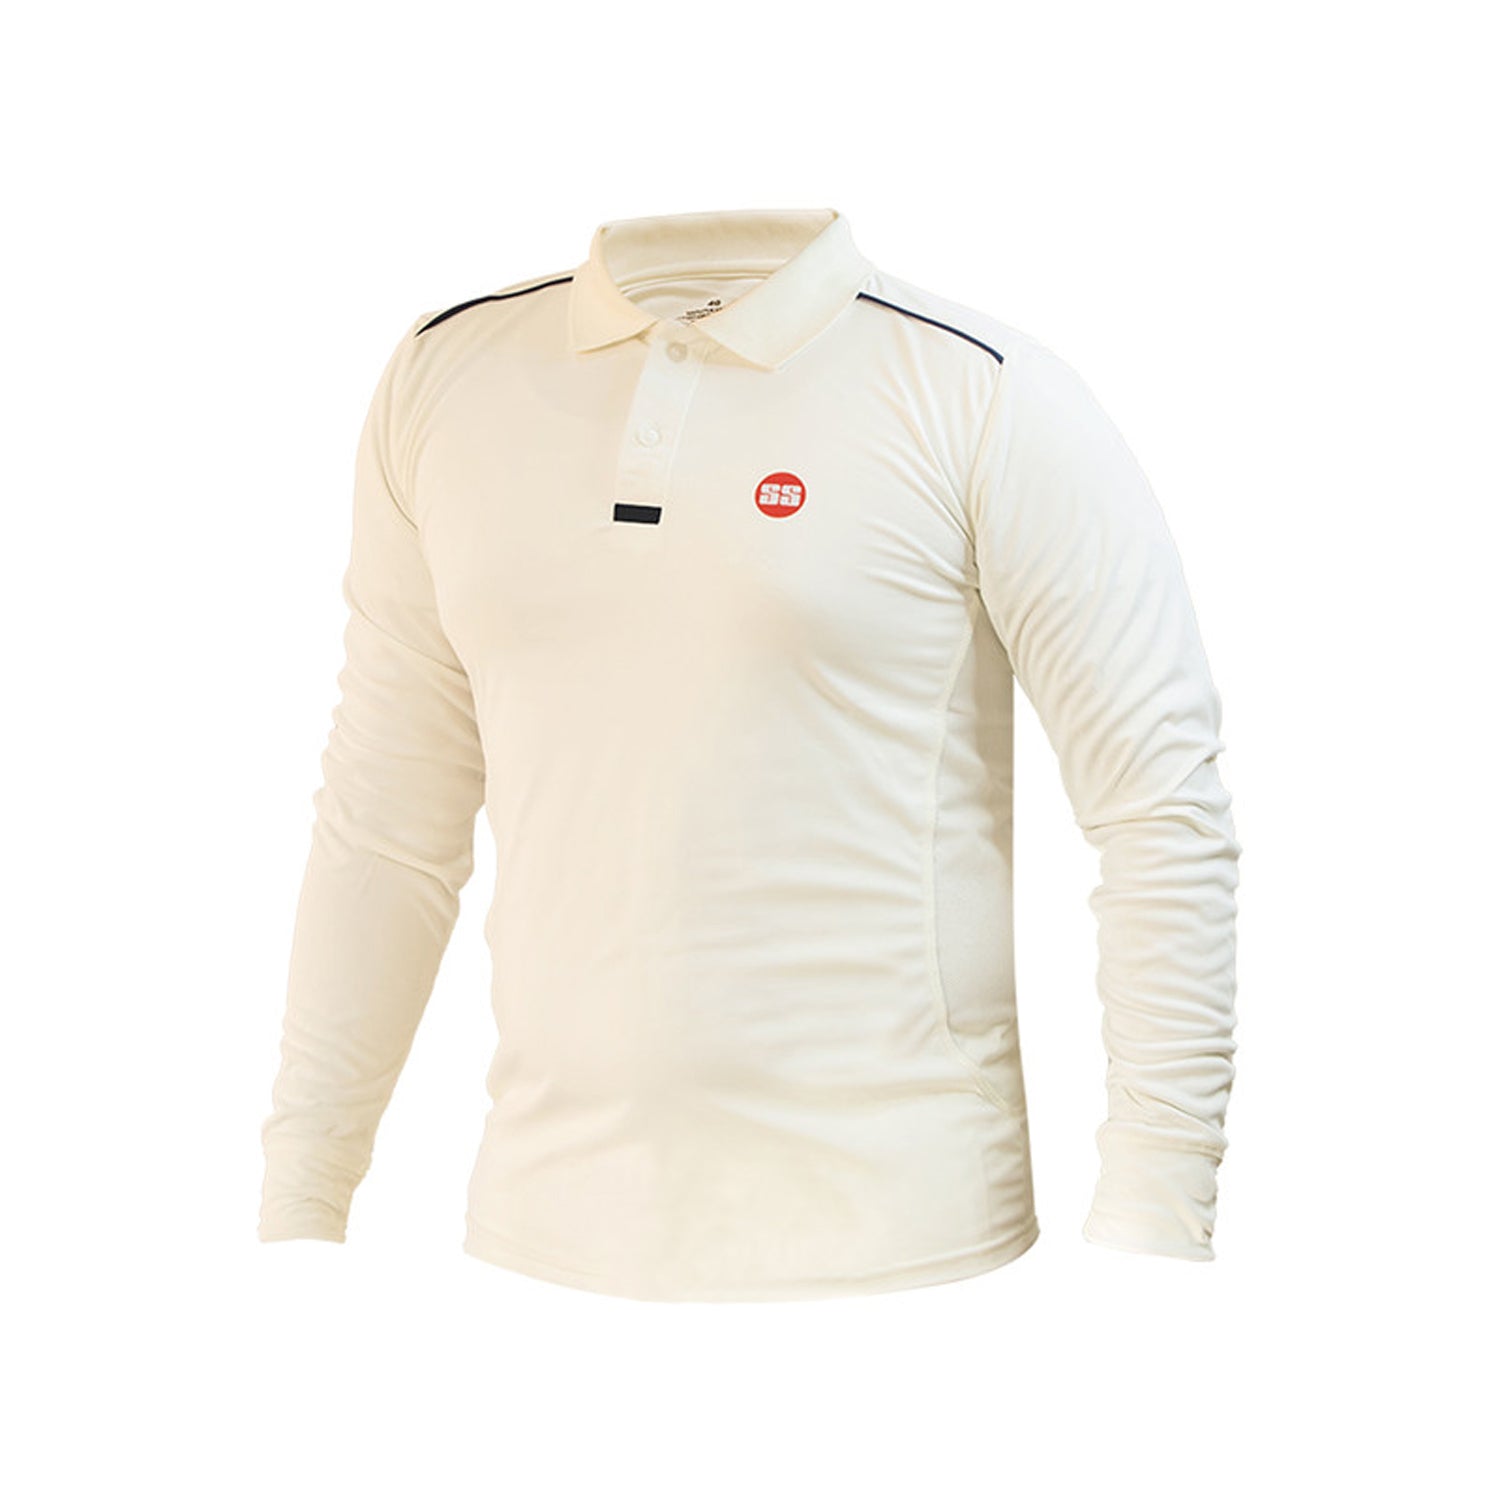 SS Player Full Sleeves Polo T-Shirt, White - Best Price online Prokicksports.com